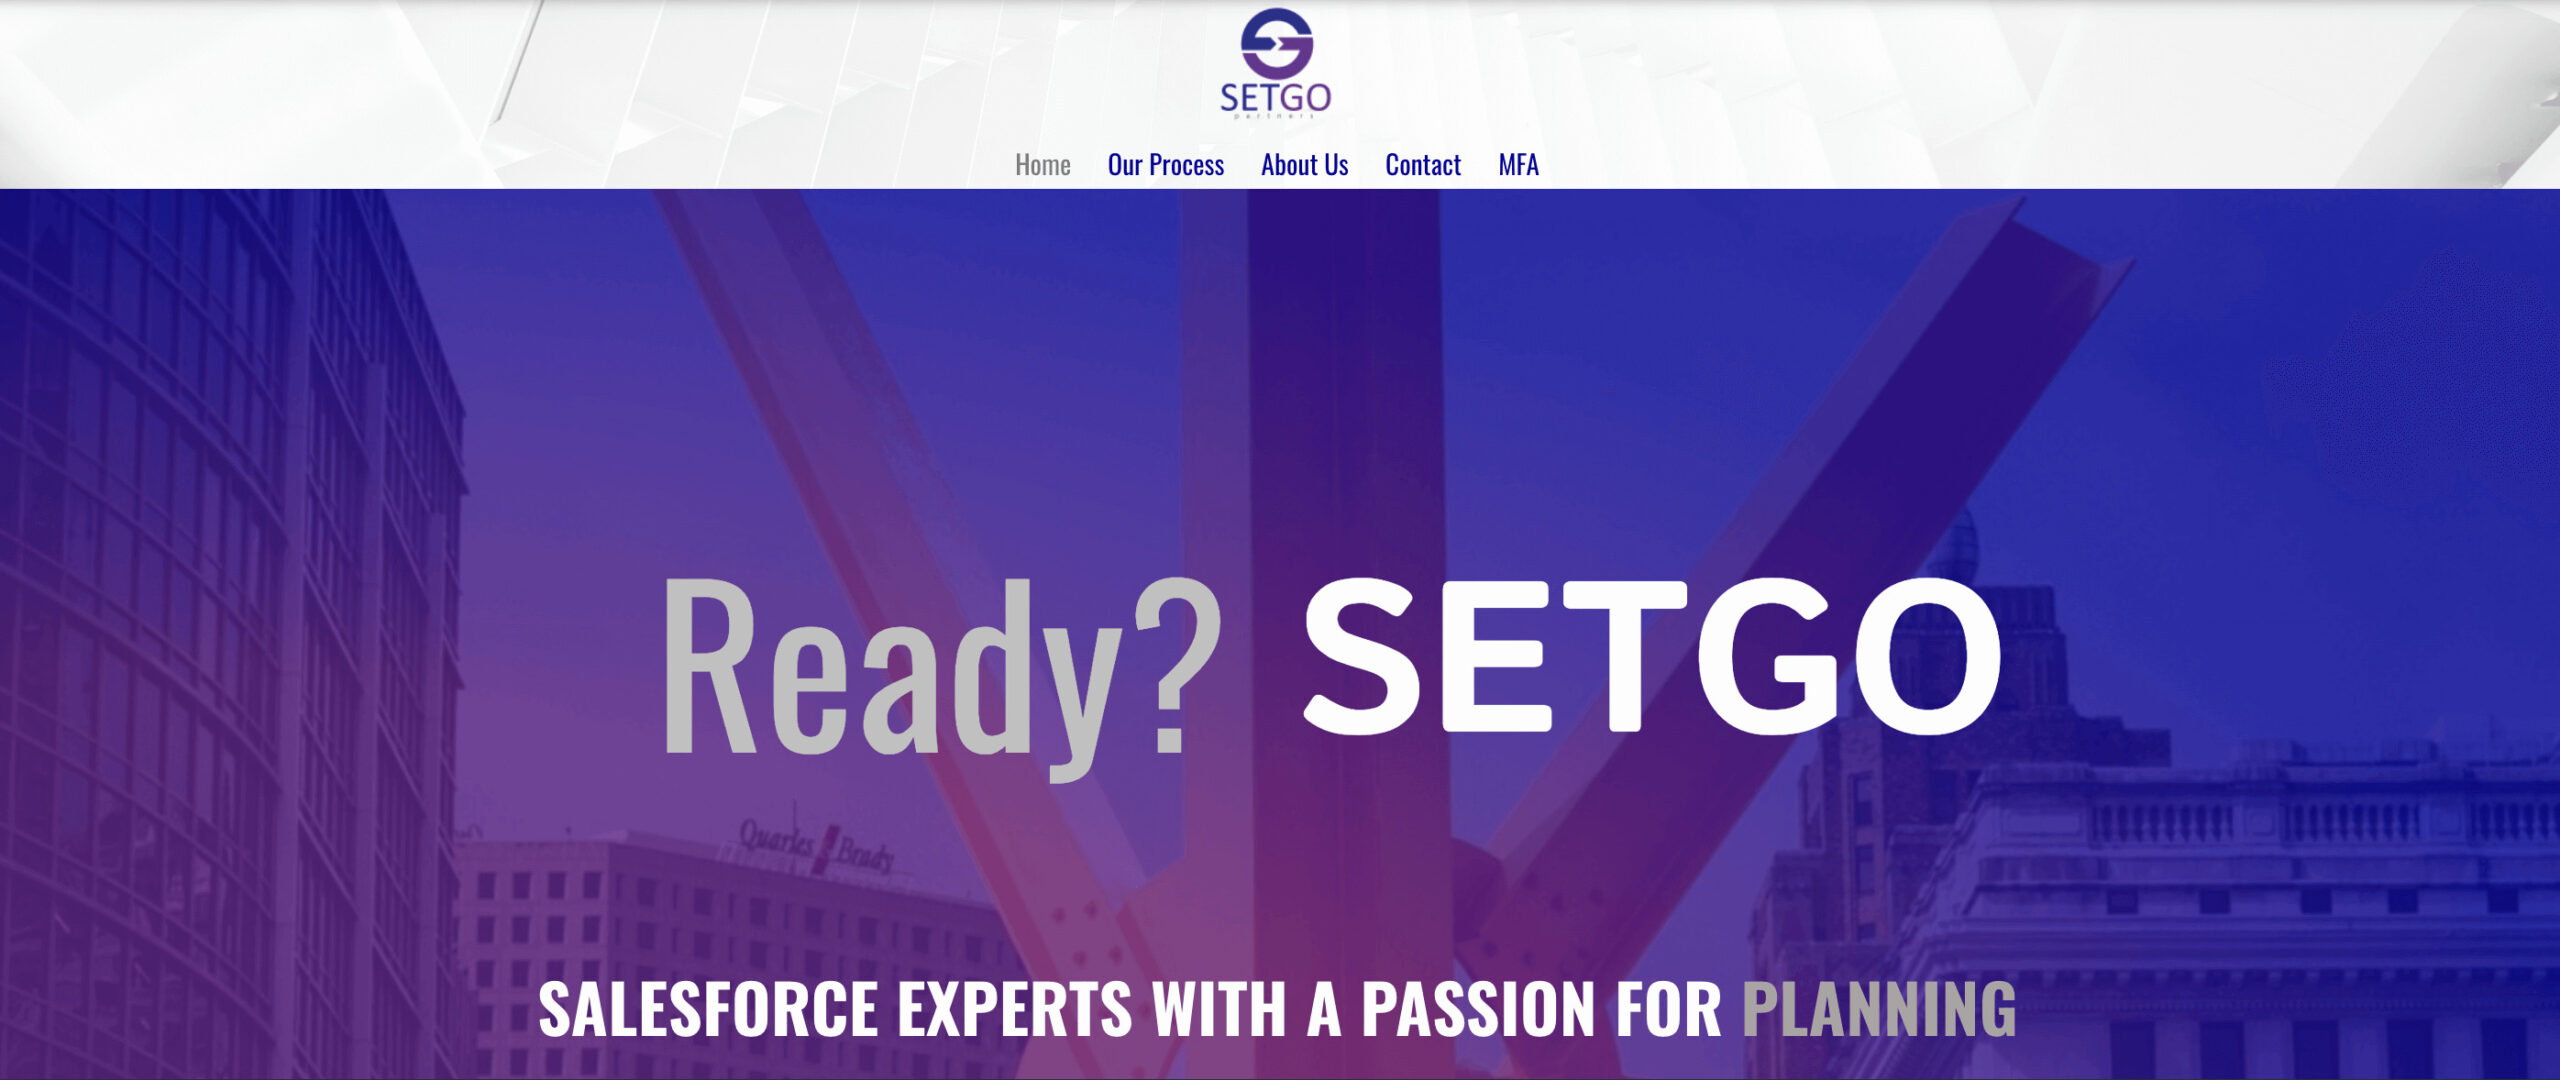 SETGO Partners Home Page